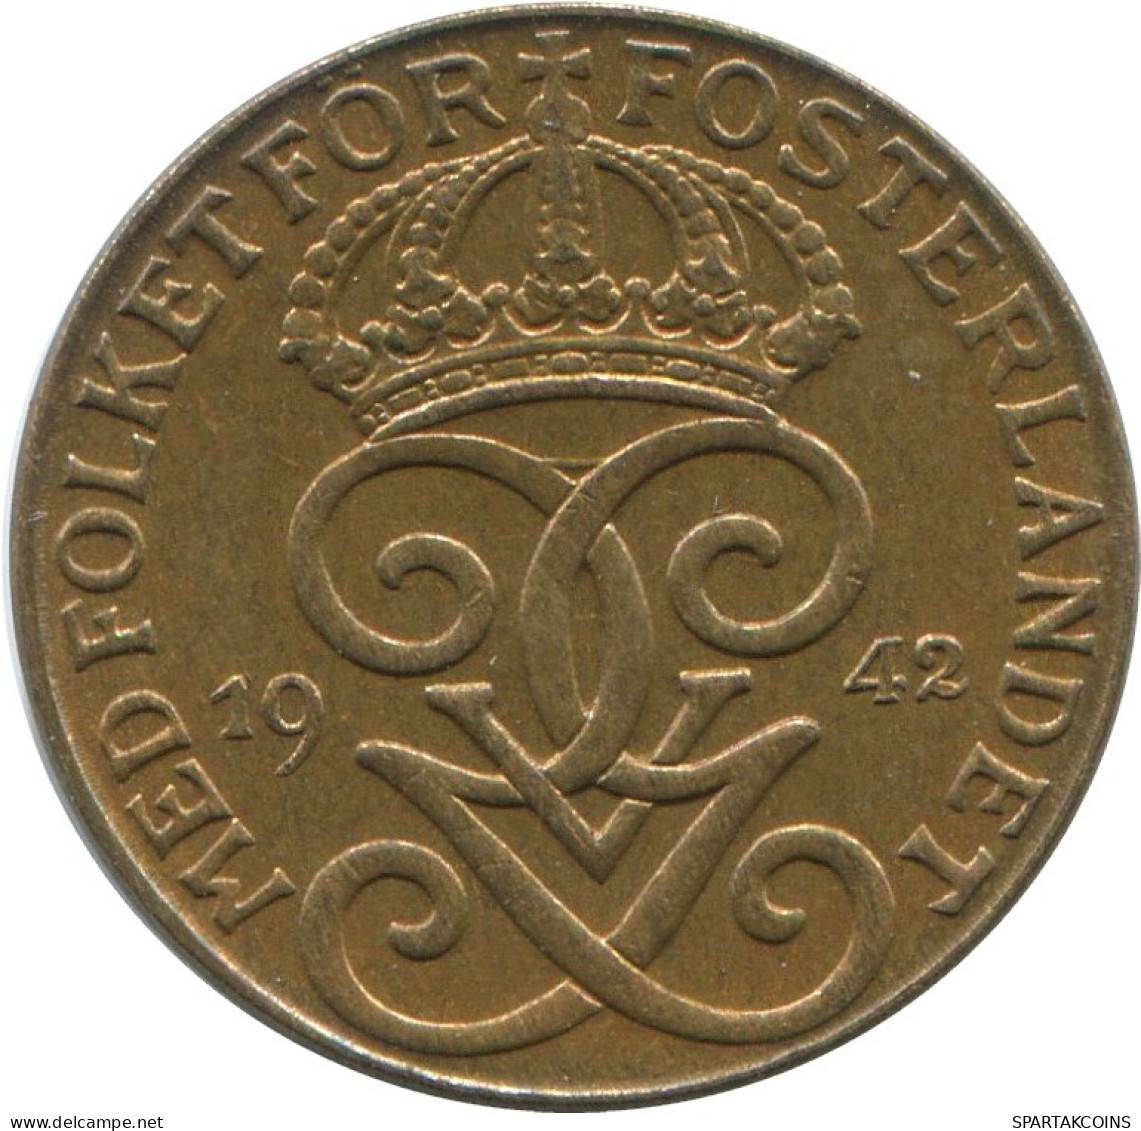 1 ORE 1942 SWEDEN Coin #AD362.2.U.A - Svezia